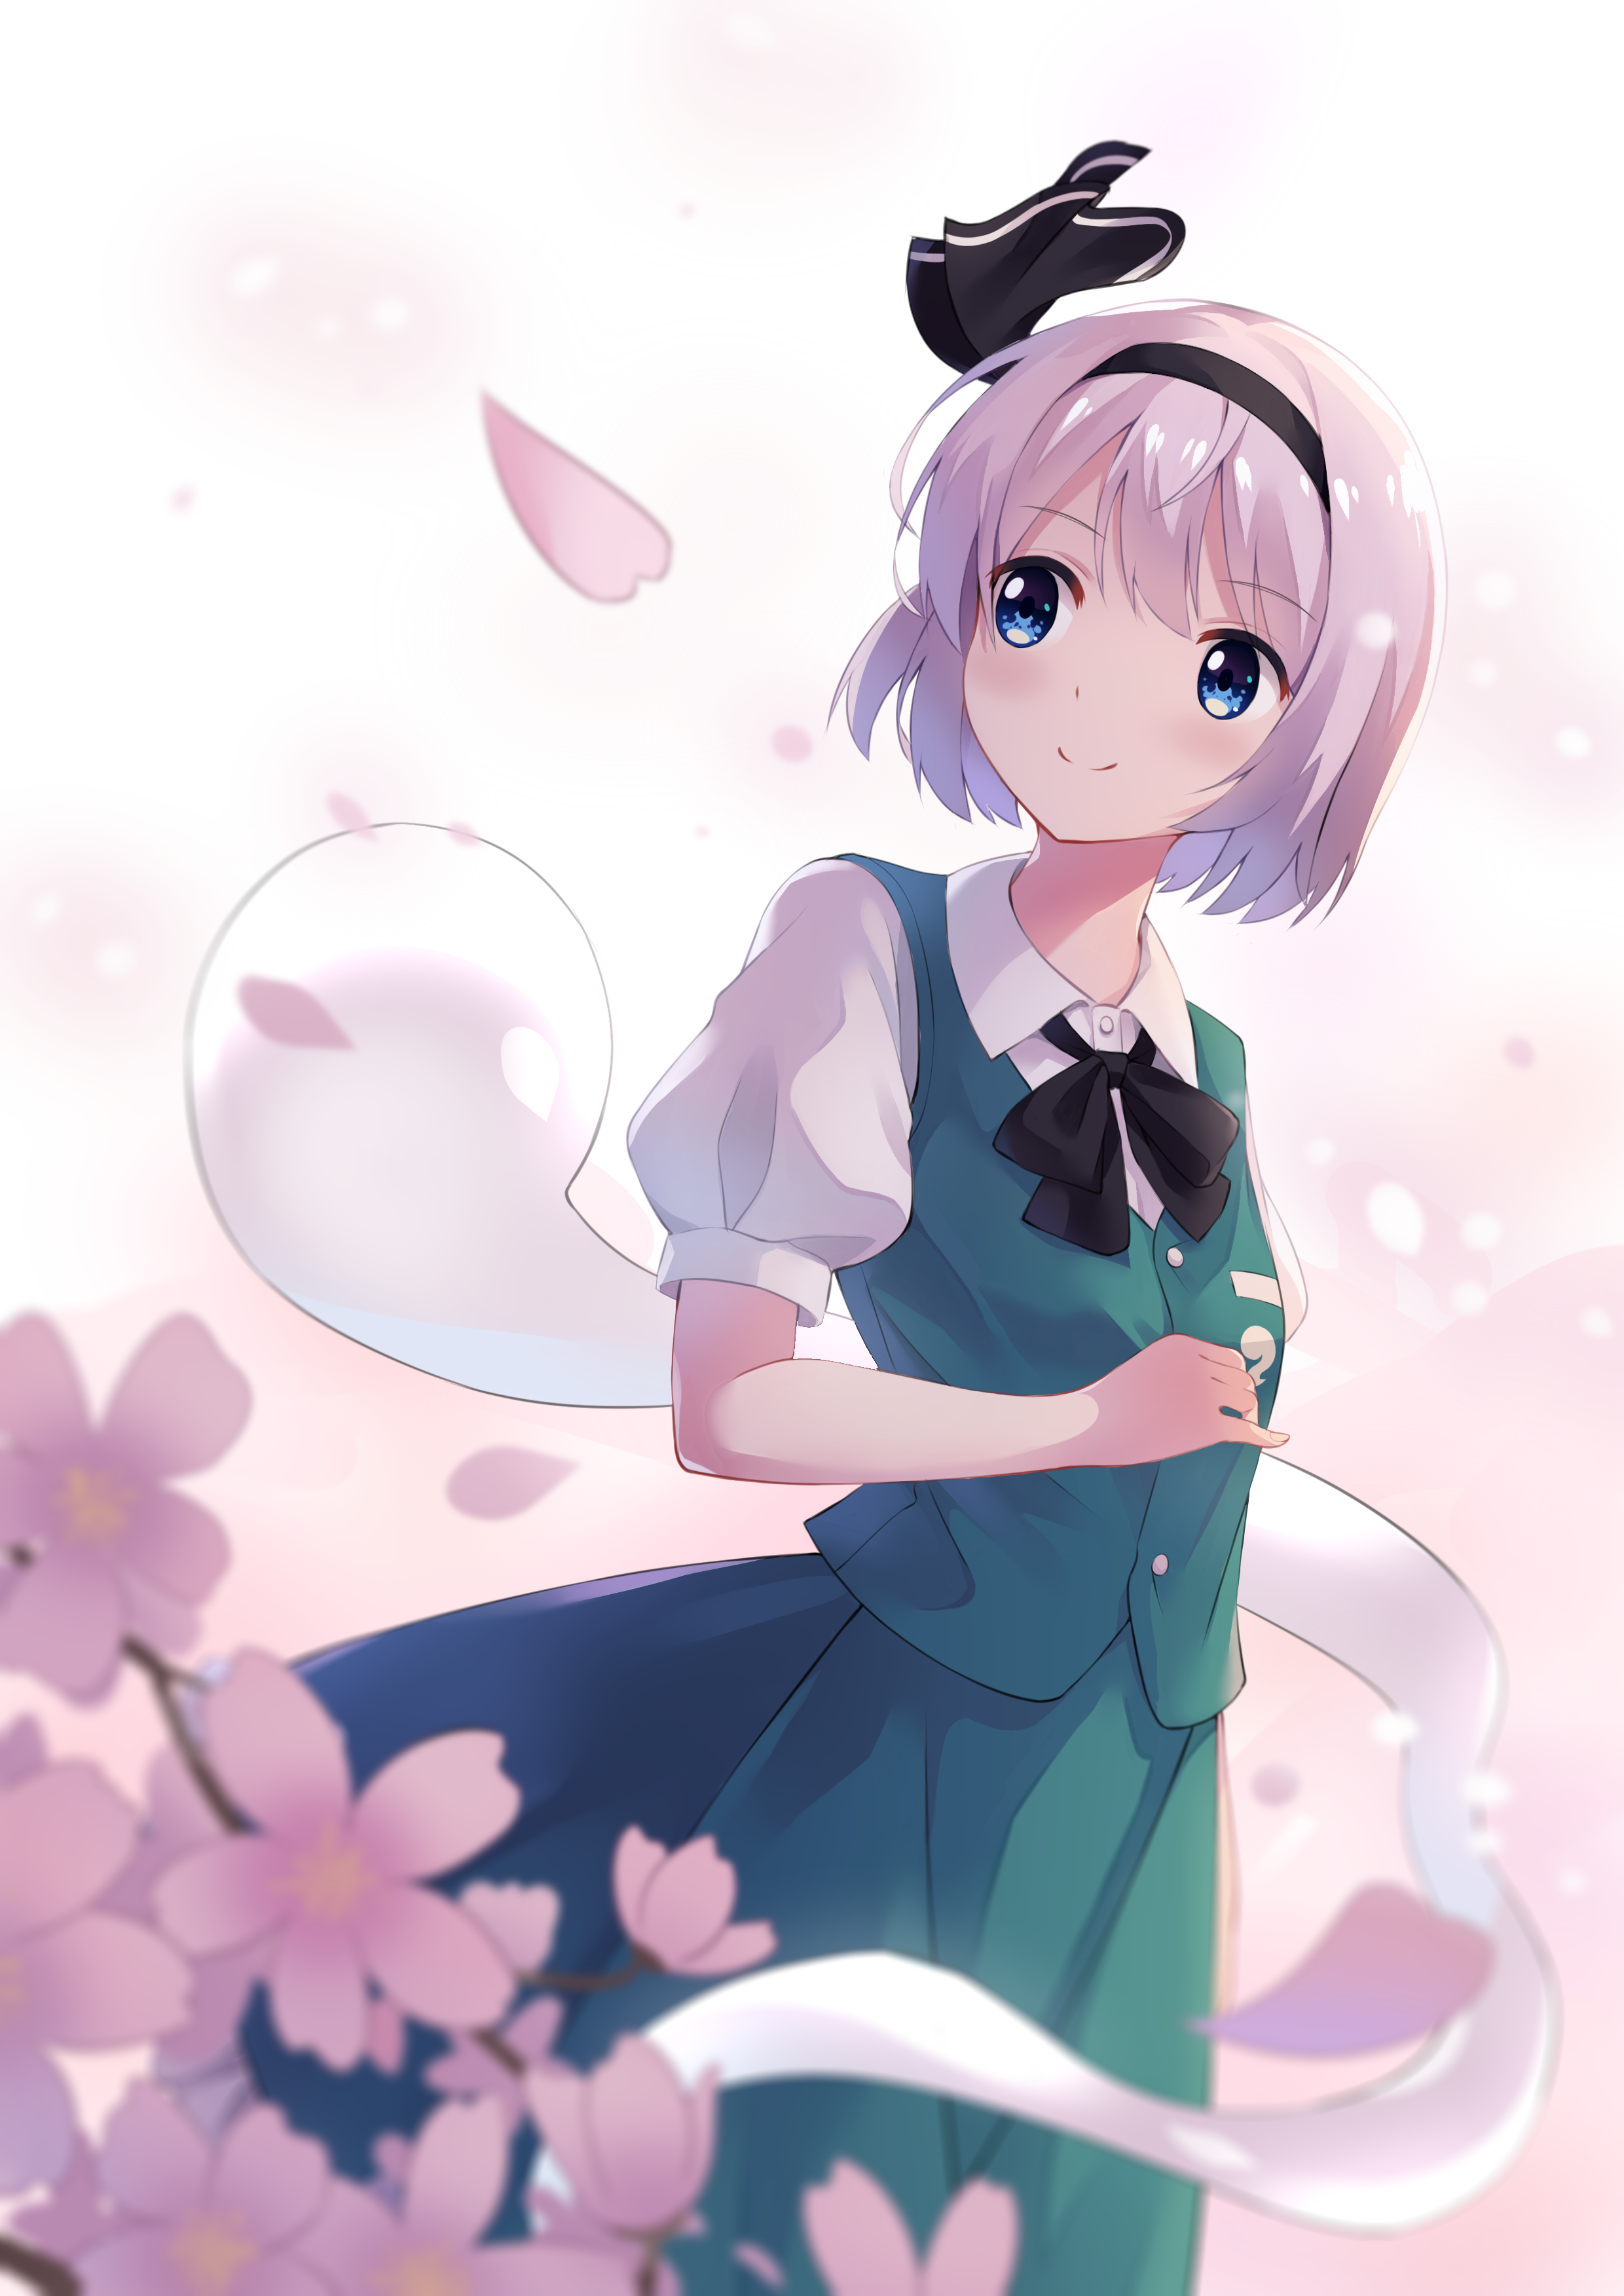 Sakura Youmu插画图片壁纸